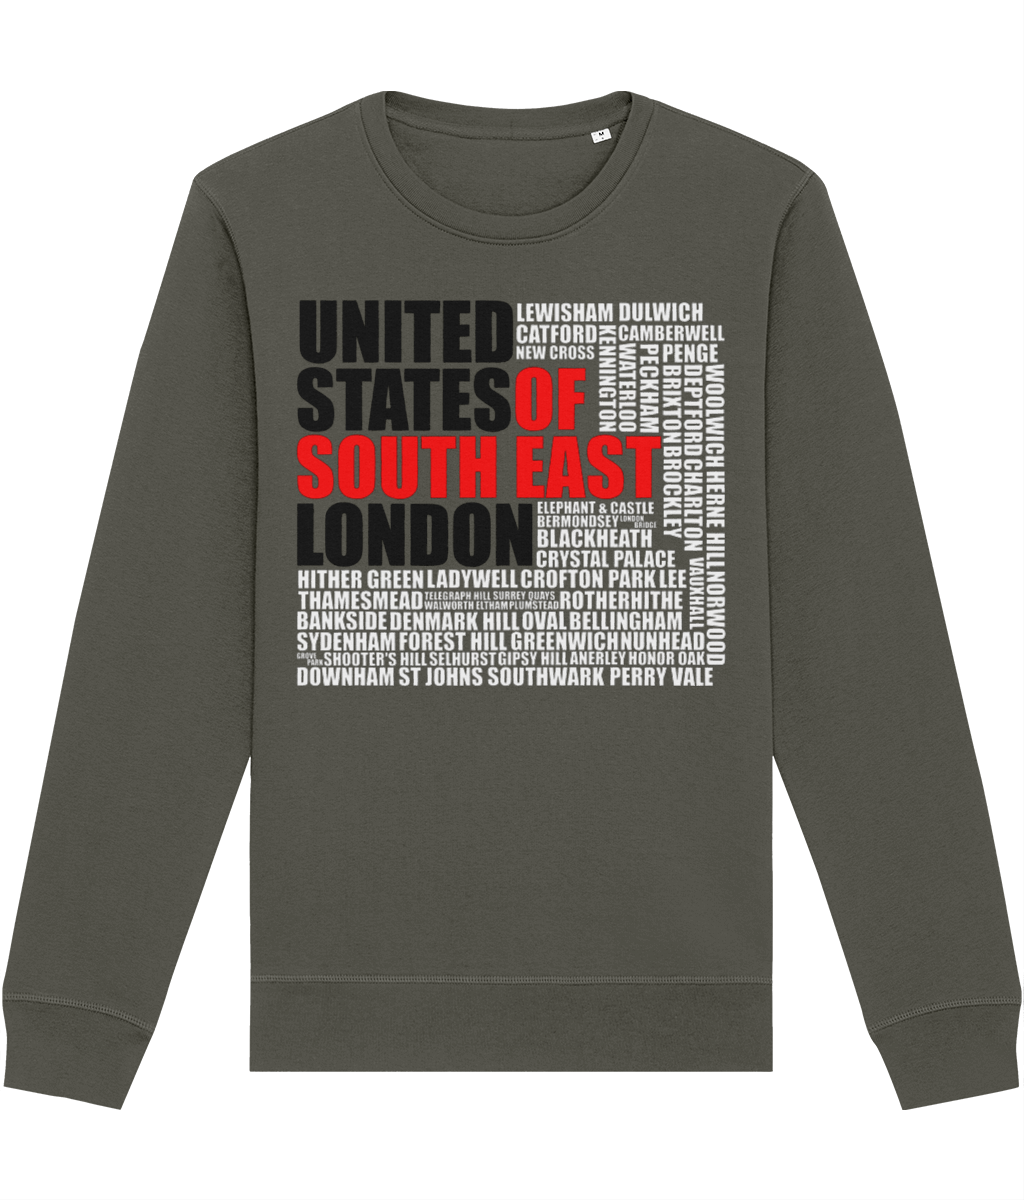 United States of South East London Sweatshirt